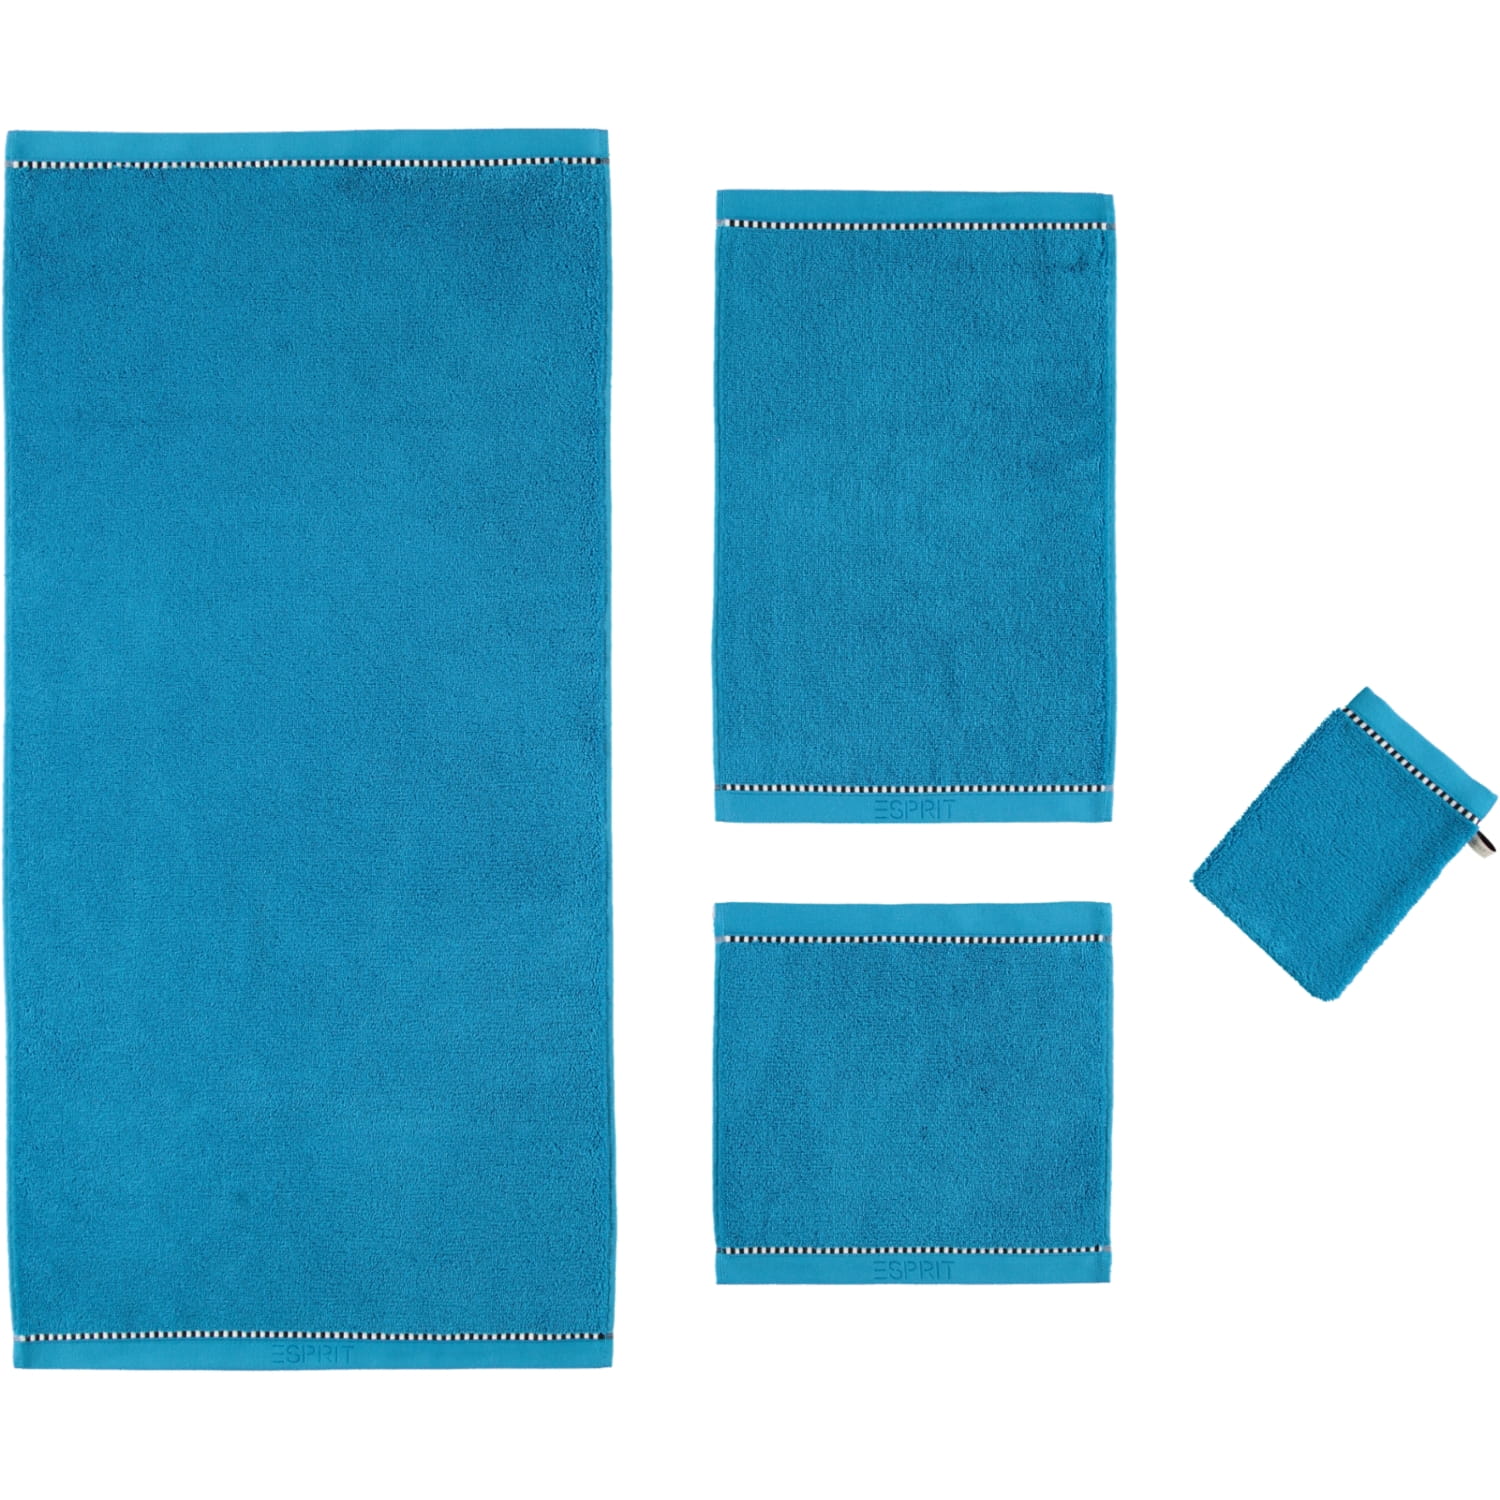 Esprit Box | blue | - ESPRIT 4665 Solid Handtücher - ESPRIT Marken | Farbe: ocean